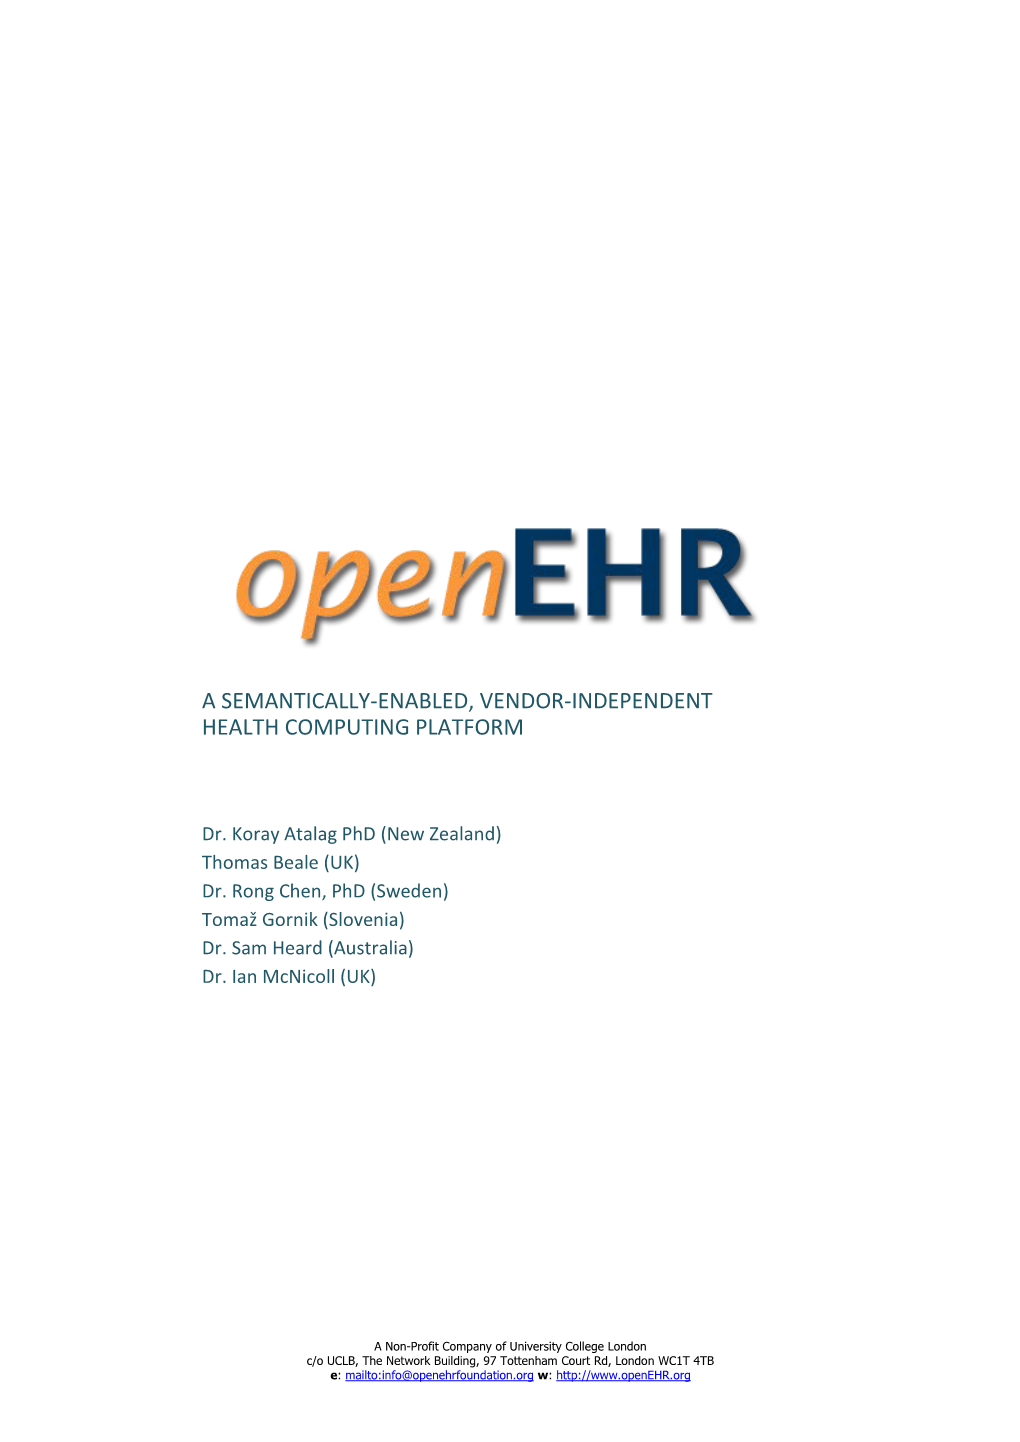 Openehrfoundation.Org W: Openehr – a Semantically-Enabled Health Computing Platform